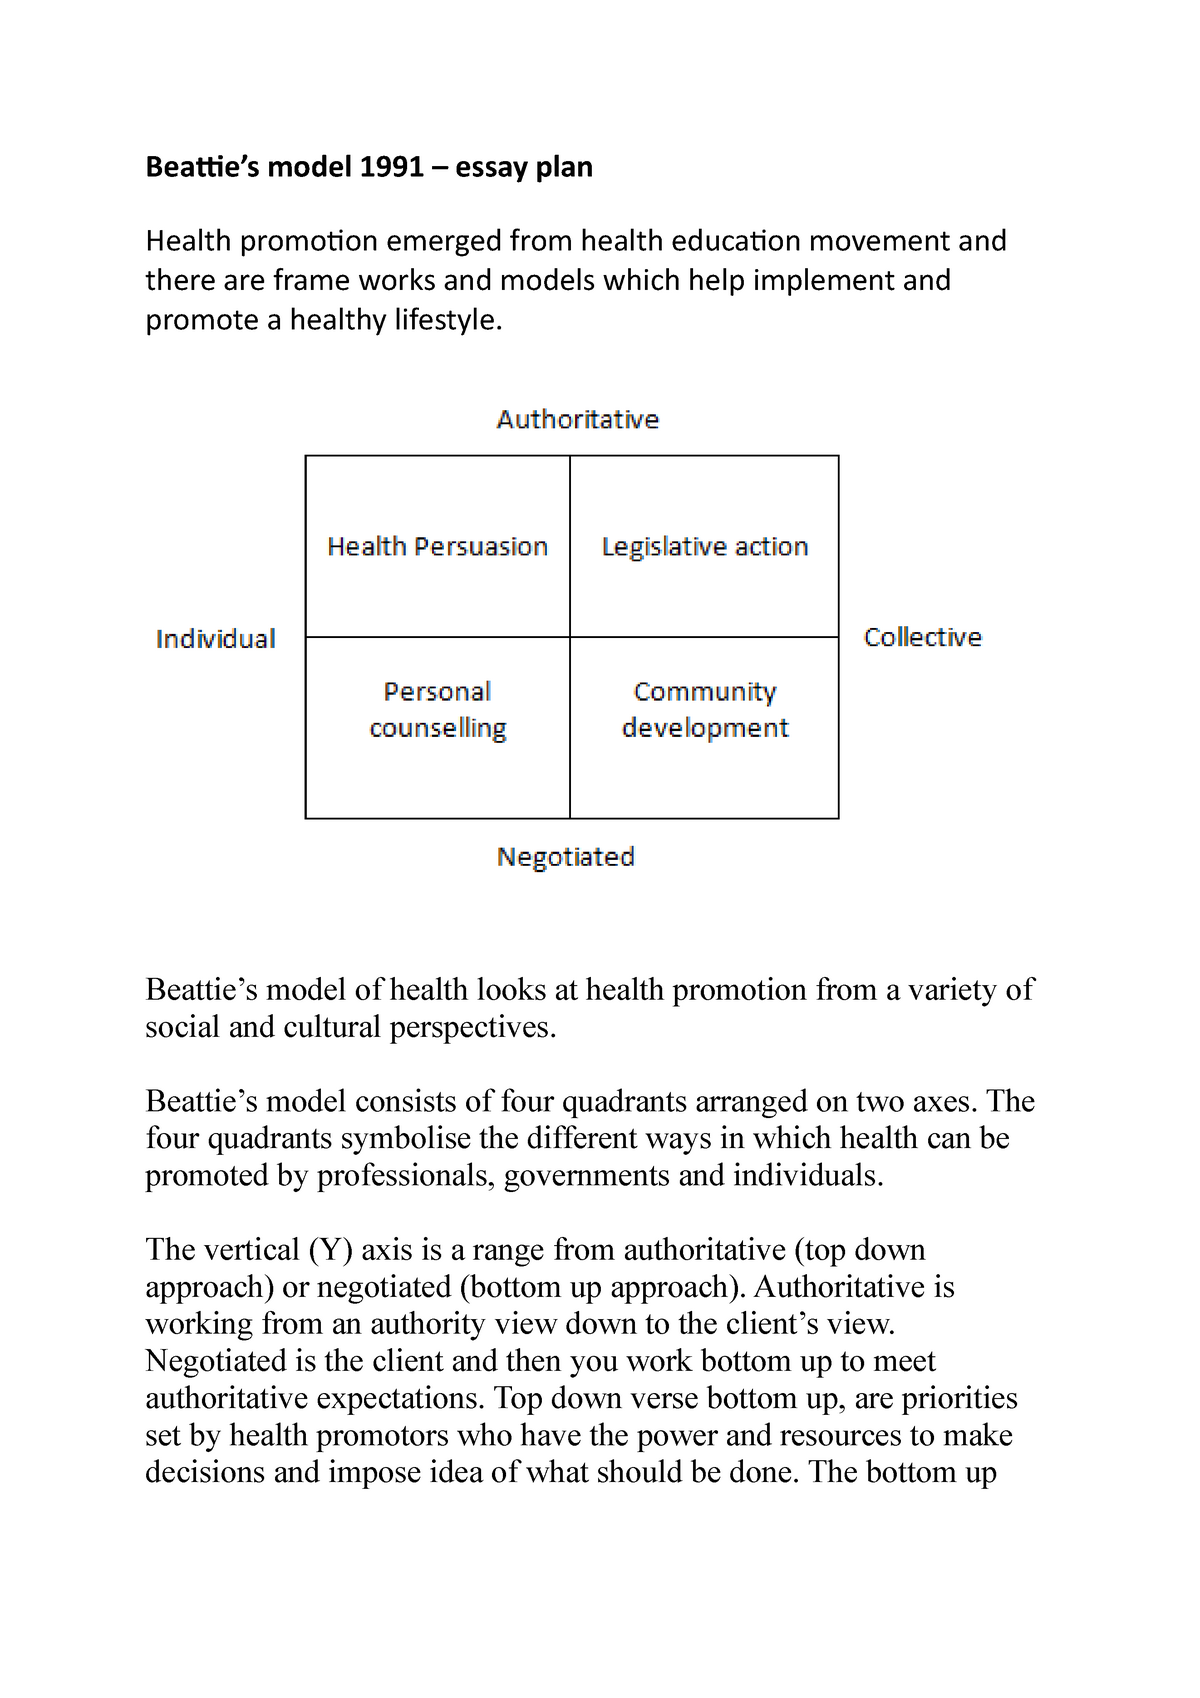 beattie model of health promotion essay